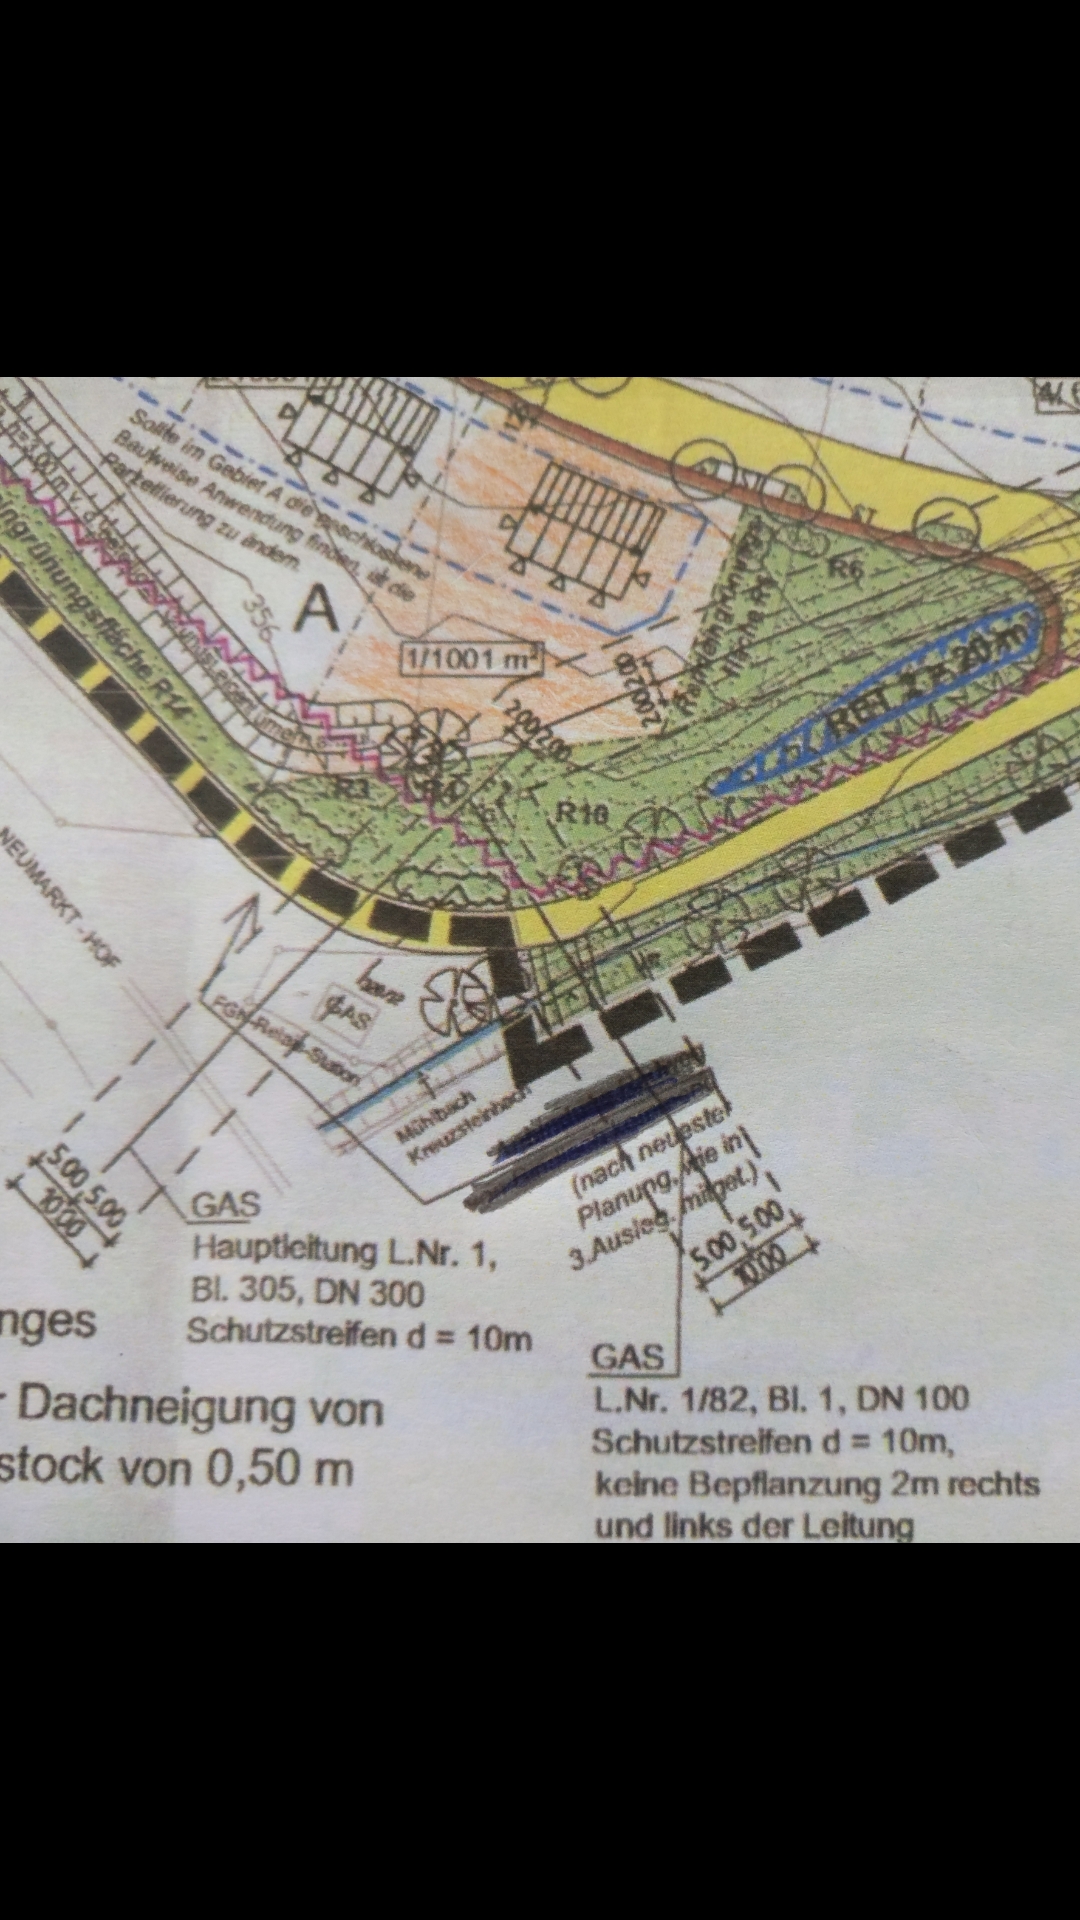 gas-hauptleitung-schutzstreifen-kreuzt-grundstueck-250643-2.jpg